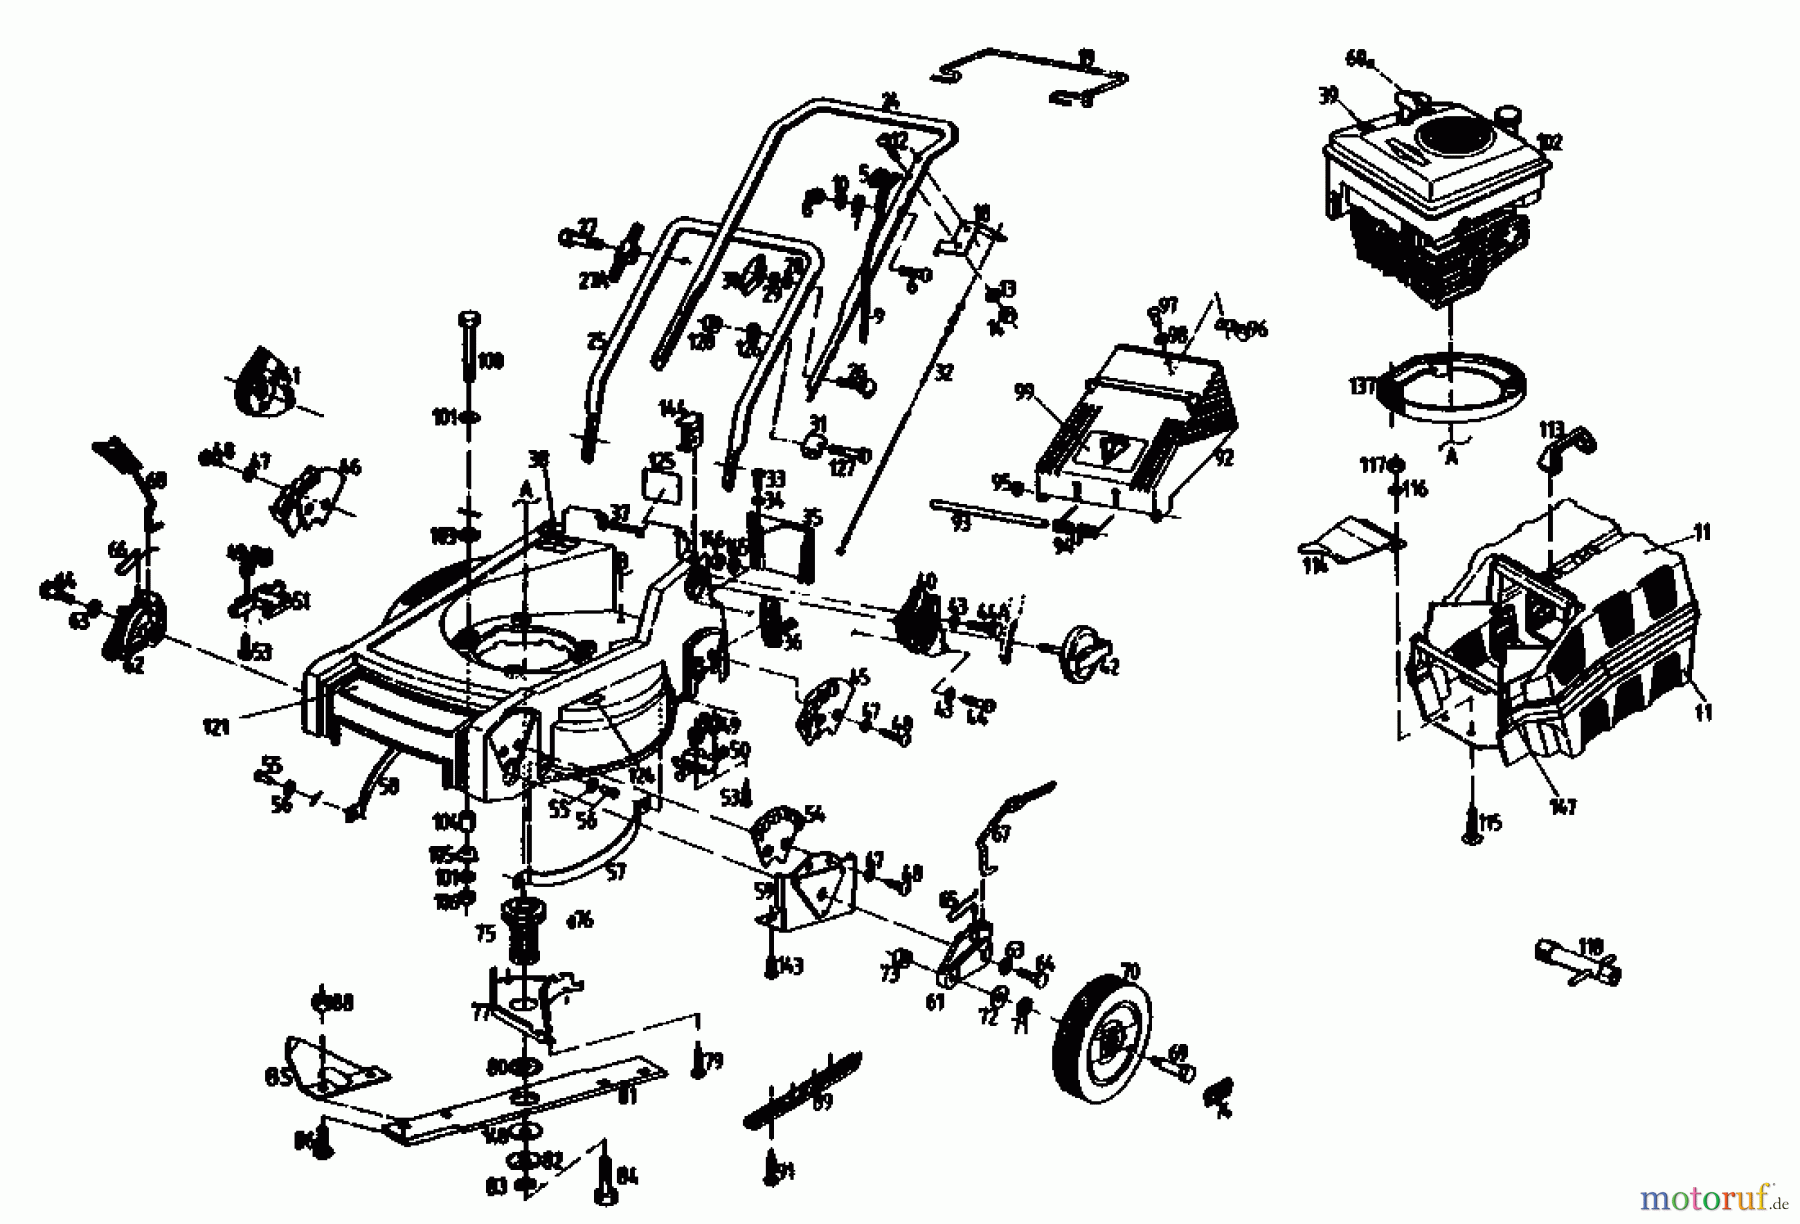  Golf Petrol mower self propelled 345 HR 4 02847.04  (1990) Basic machine